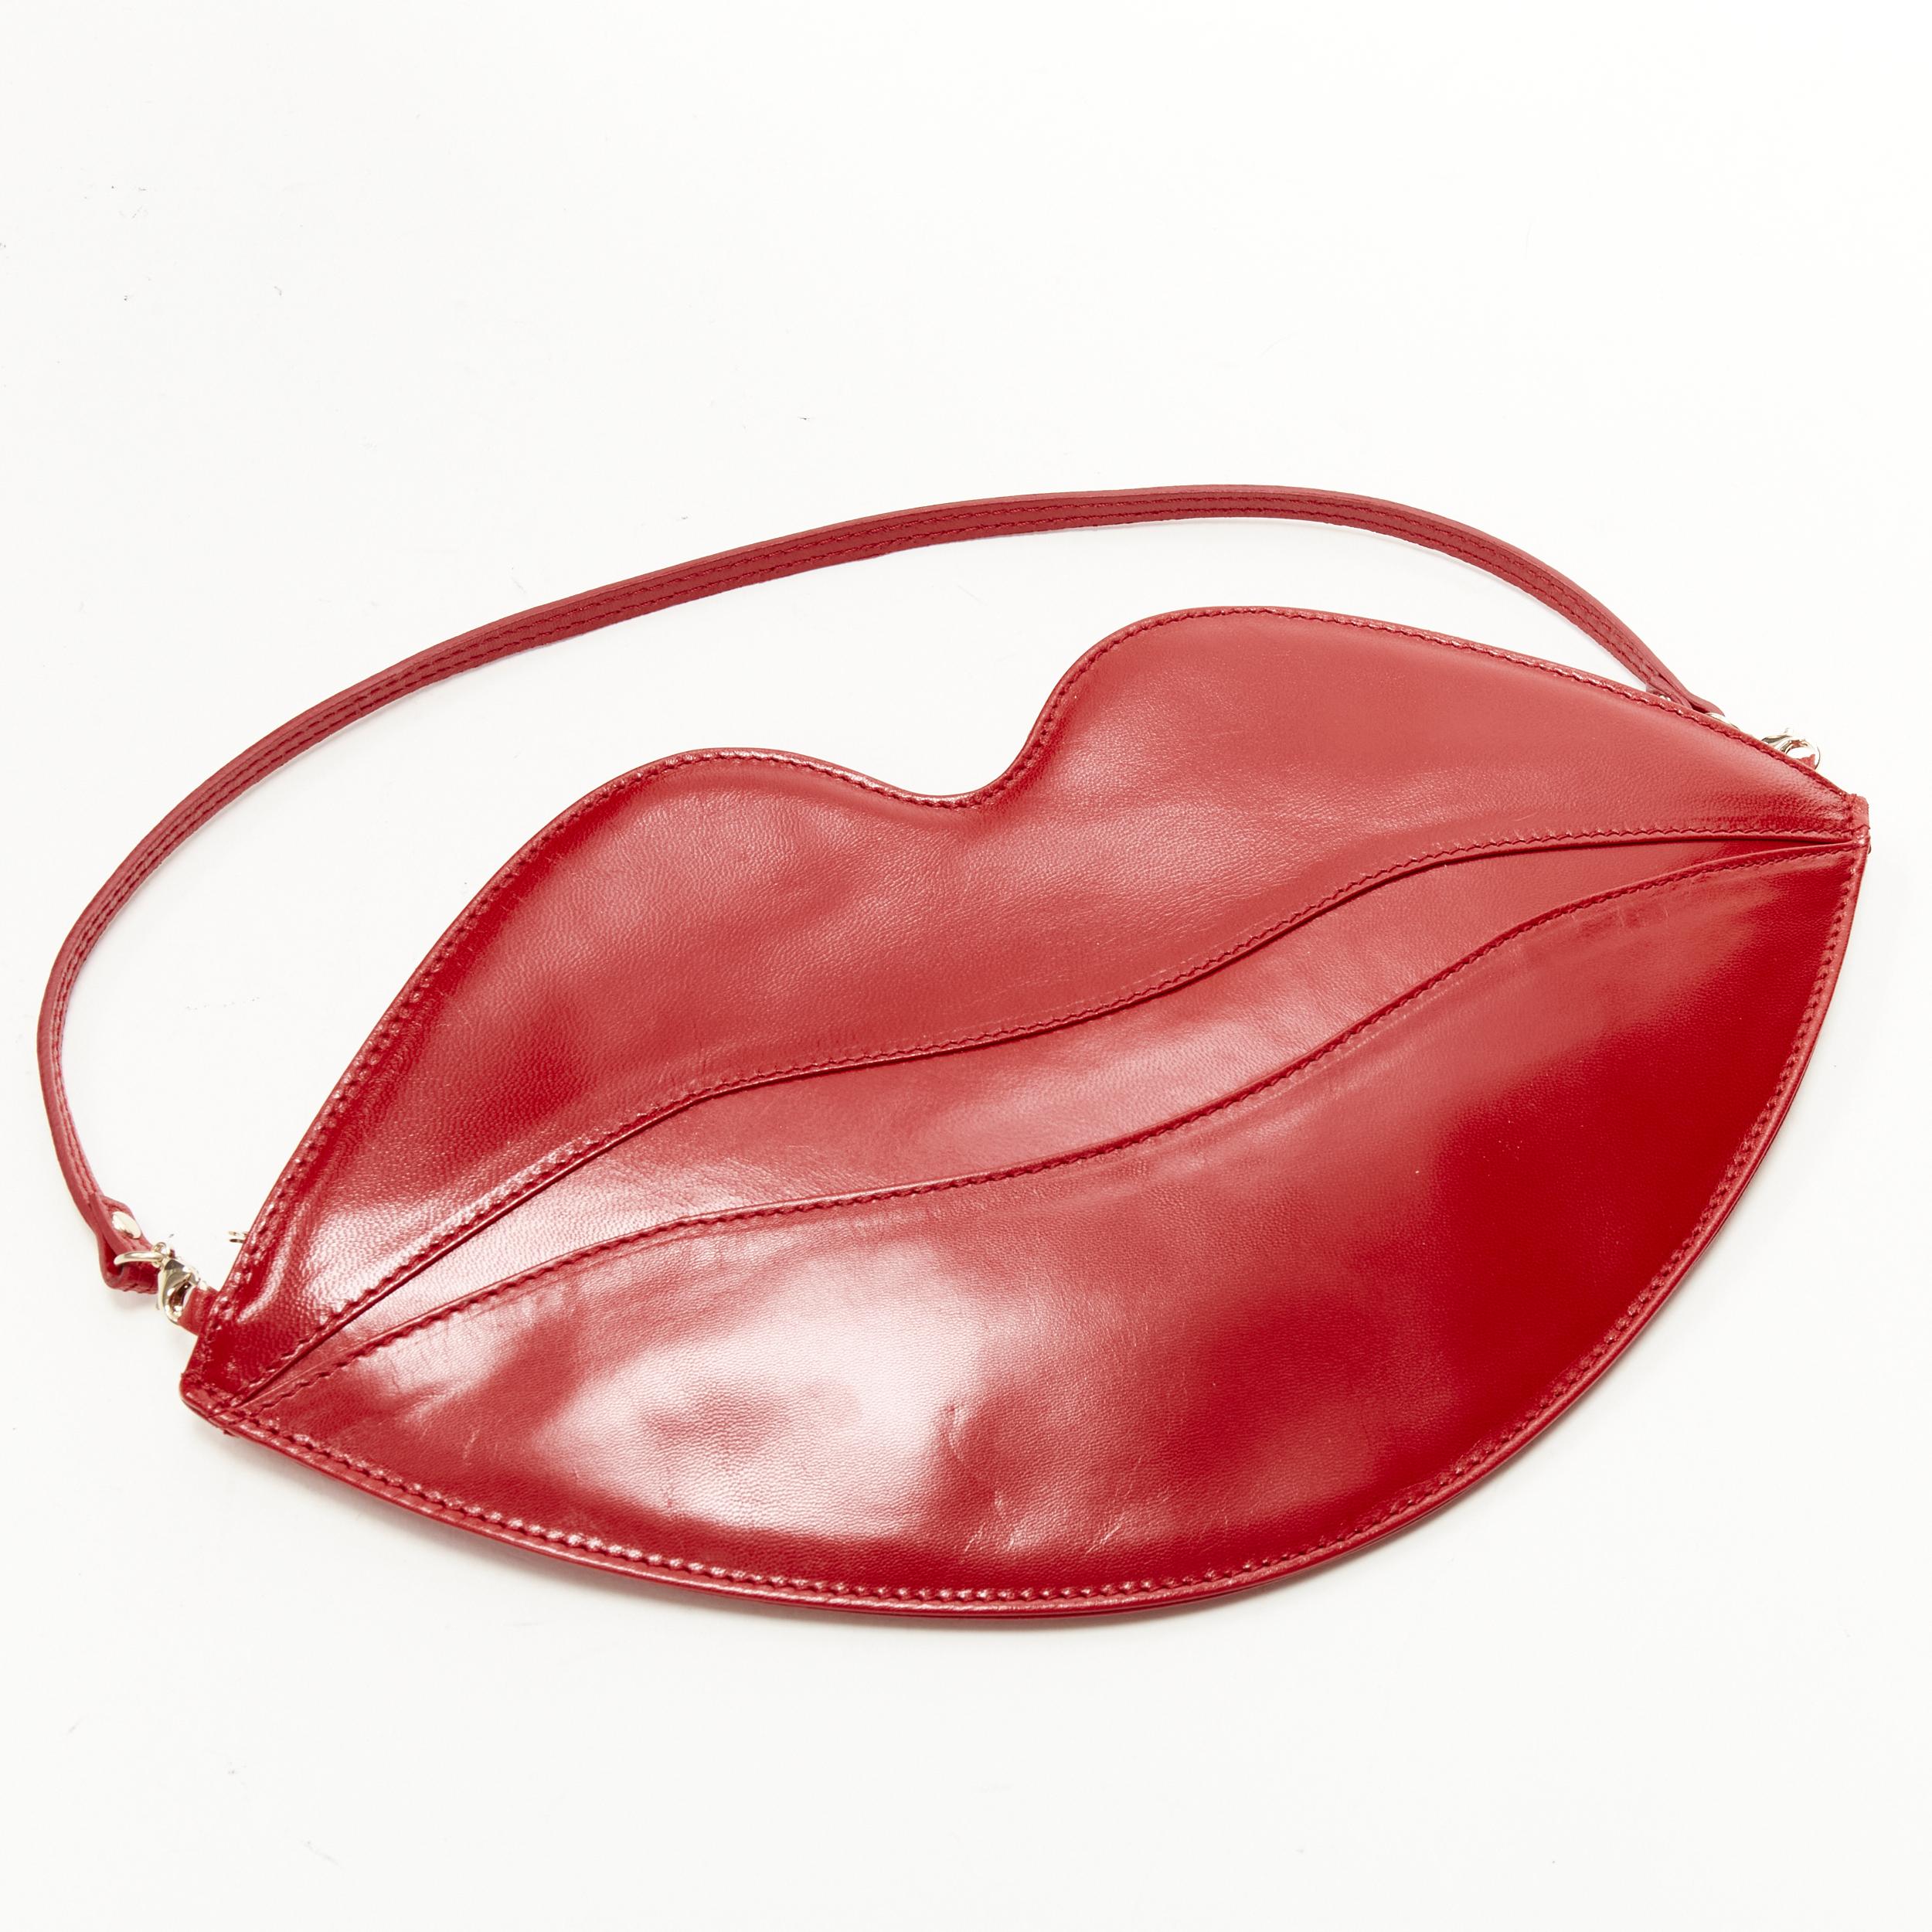 CHARLOTTE OLYMPIA Big Kiss red leather lips top handle flat zip bag 2